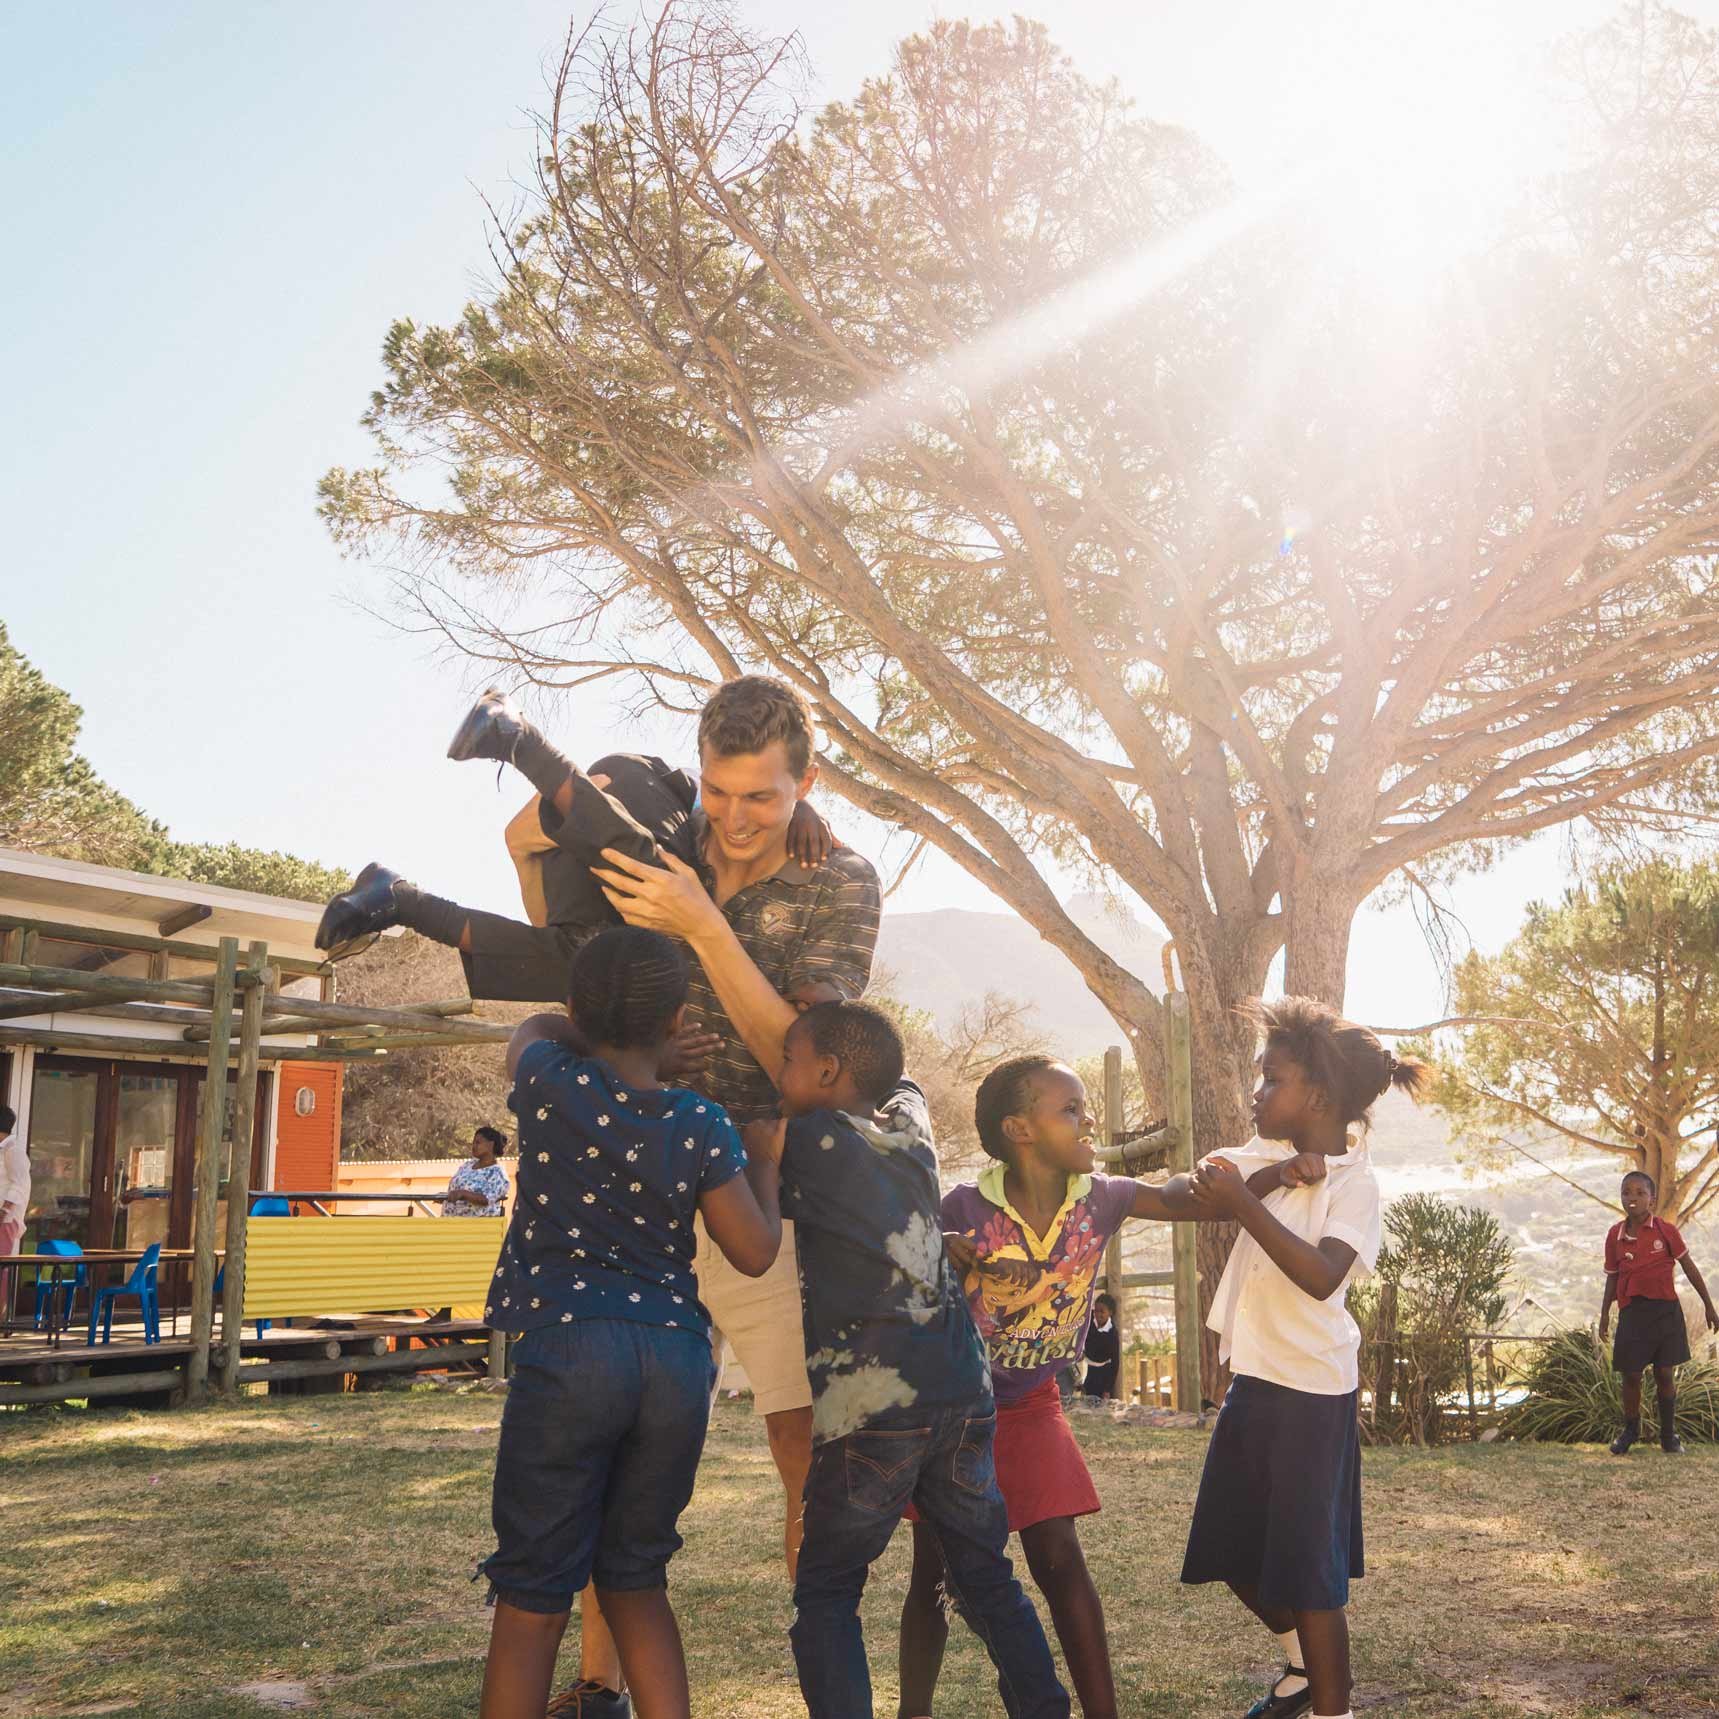 AIFS-Freiwilligenarbeit-Suedafrika-Volunteer-Kinderbetreuung-Kinder-engagieren-spielen-Spaß-Freude